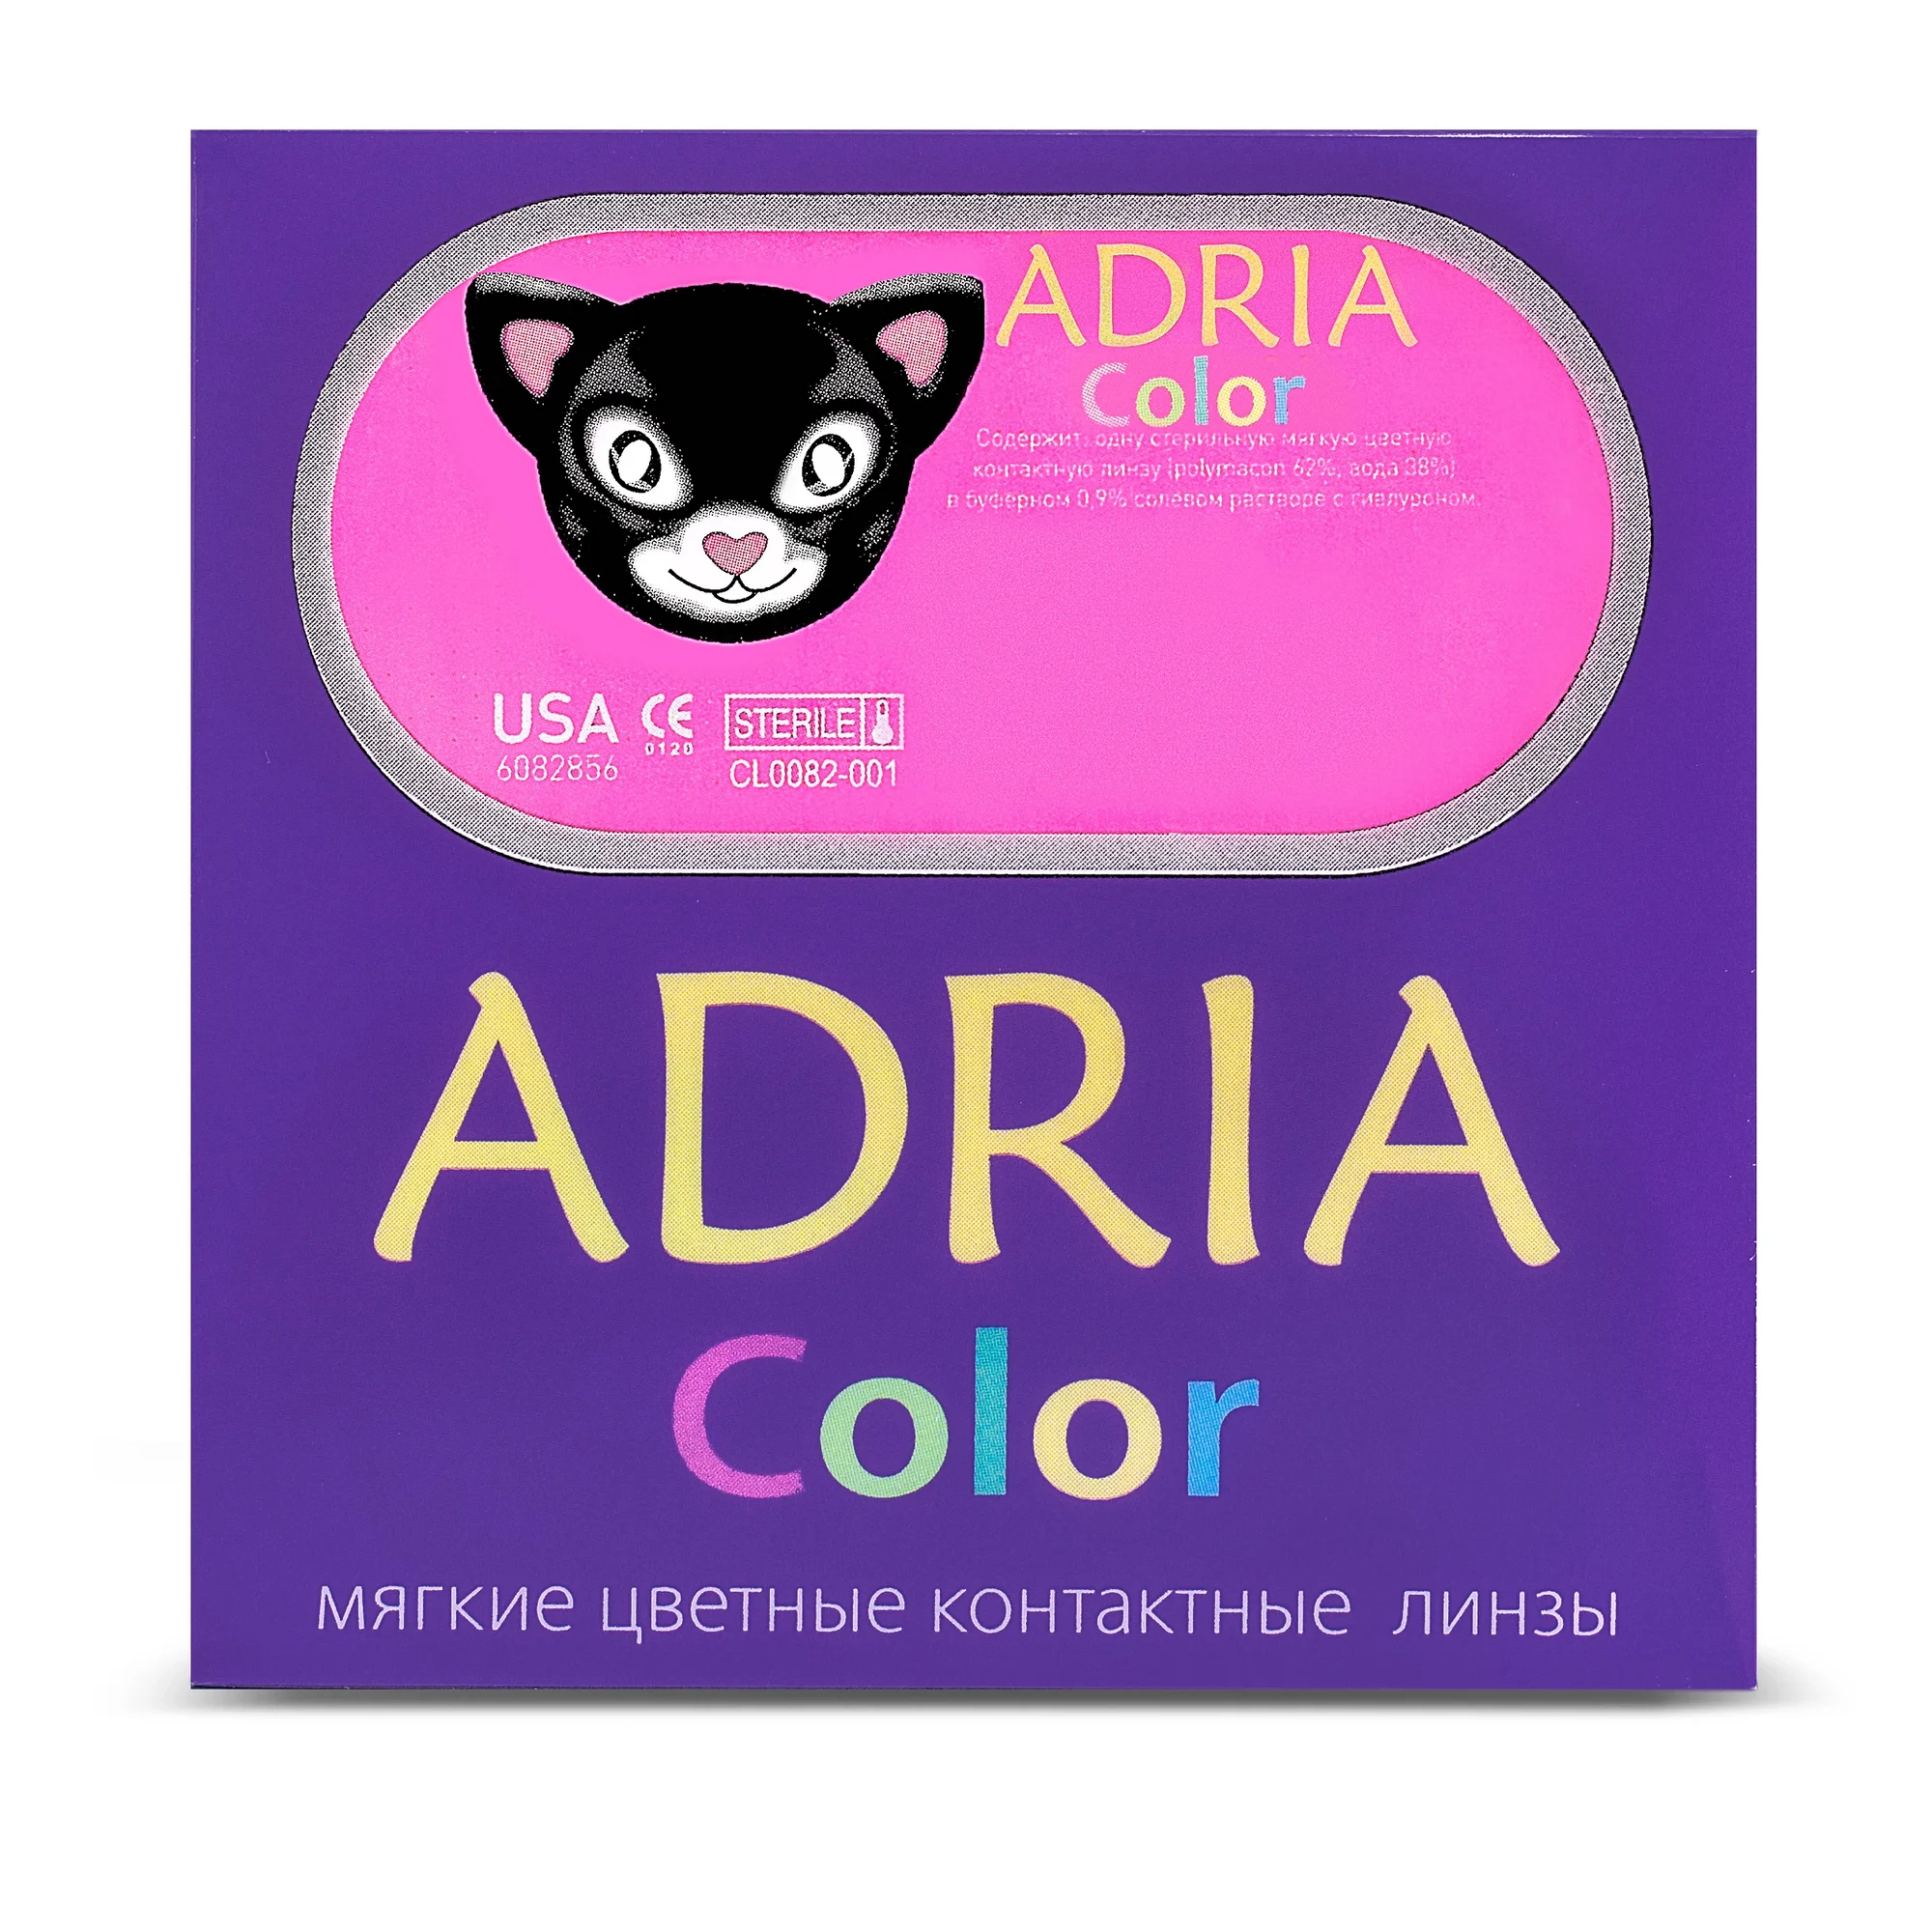 COLOR BOX ADRIA Color 3 Tone Turquoise (бирюзовый)